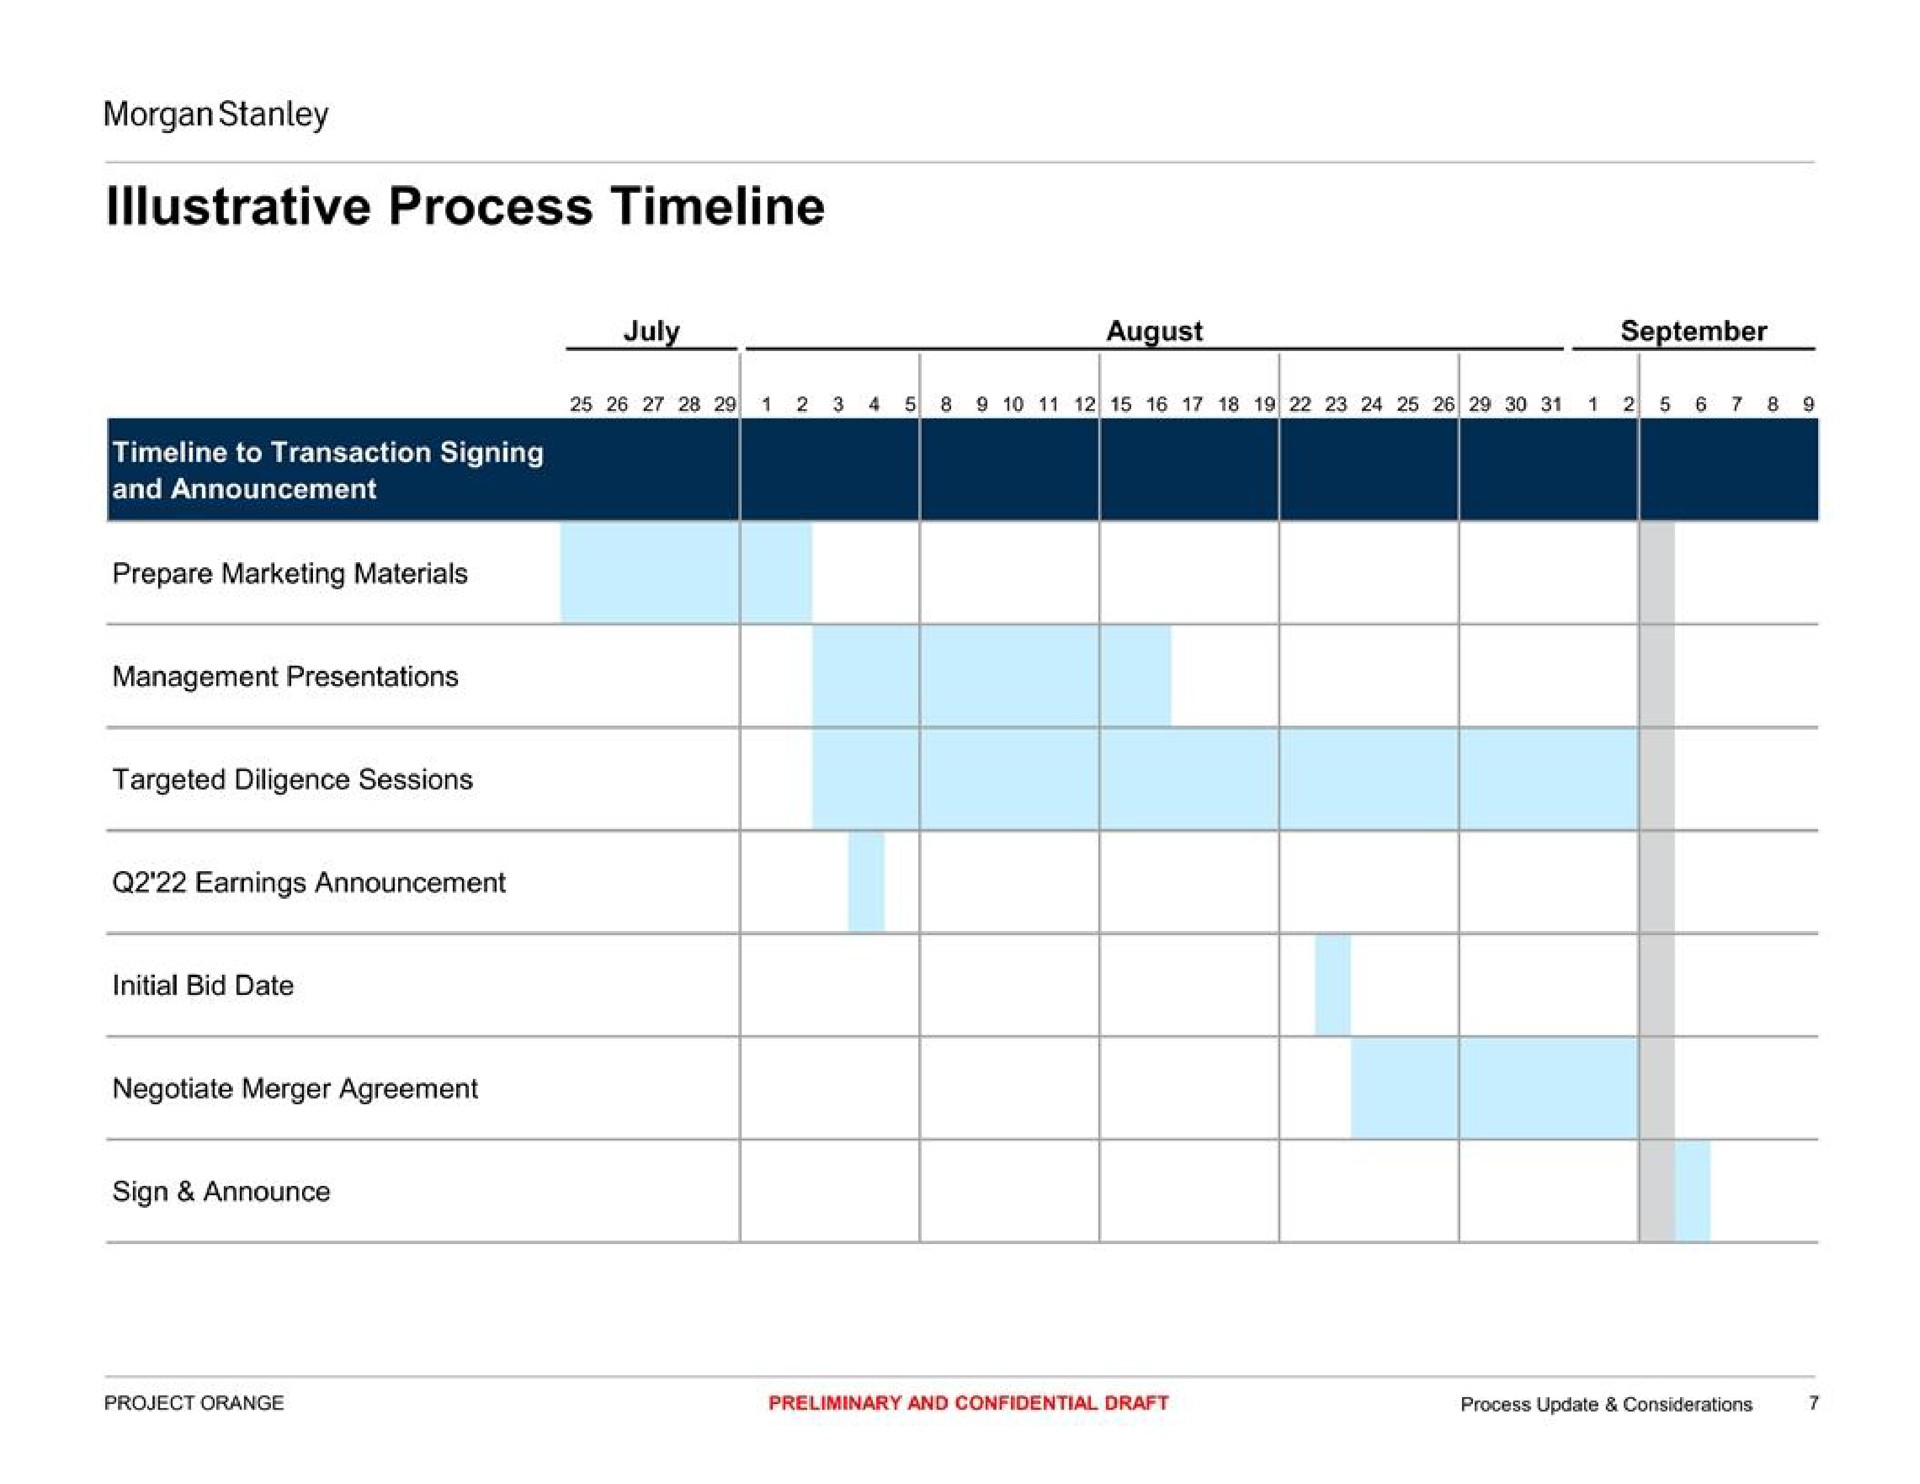 illustrative process | Morgan Stanley